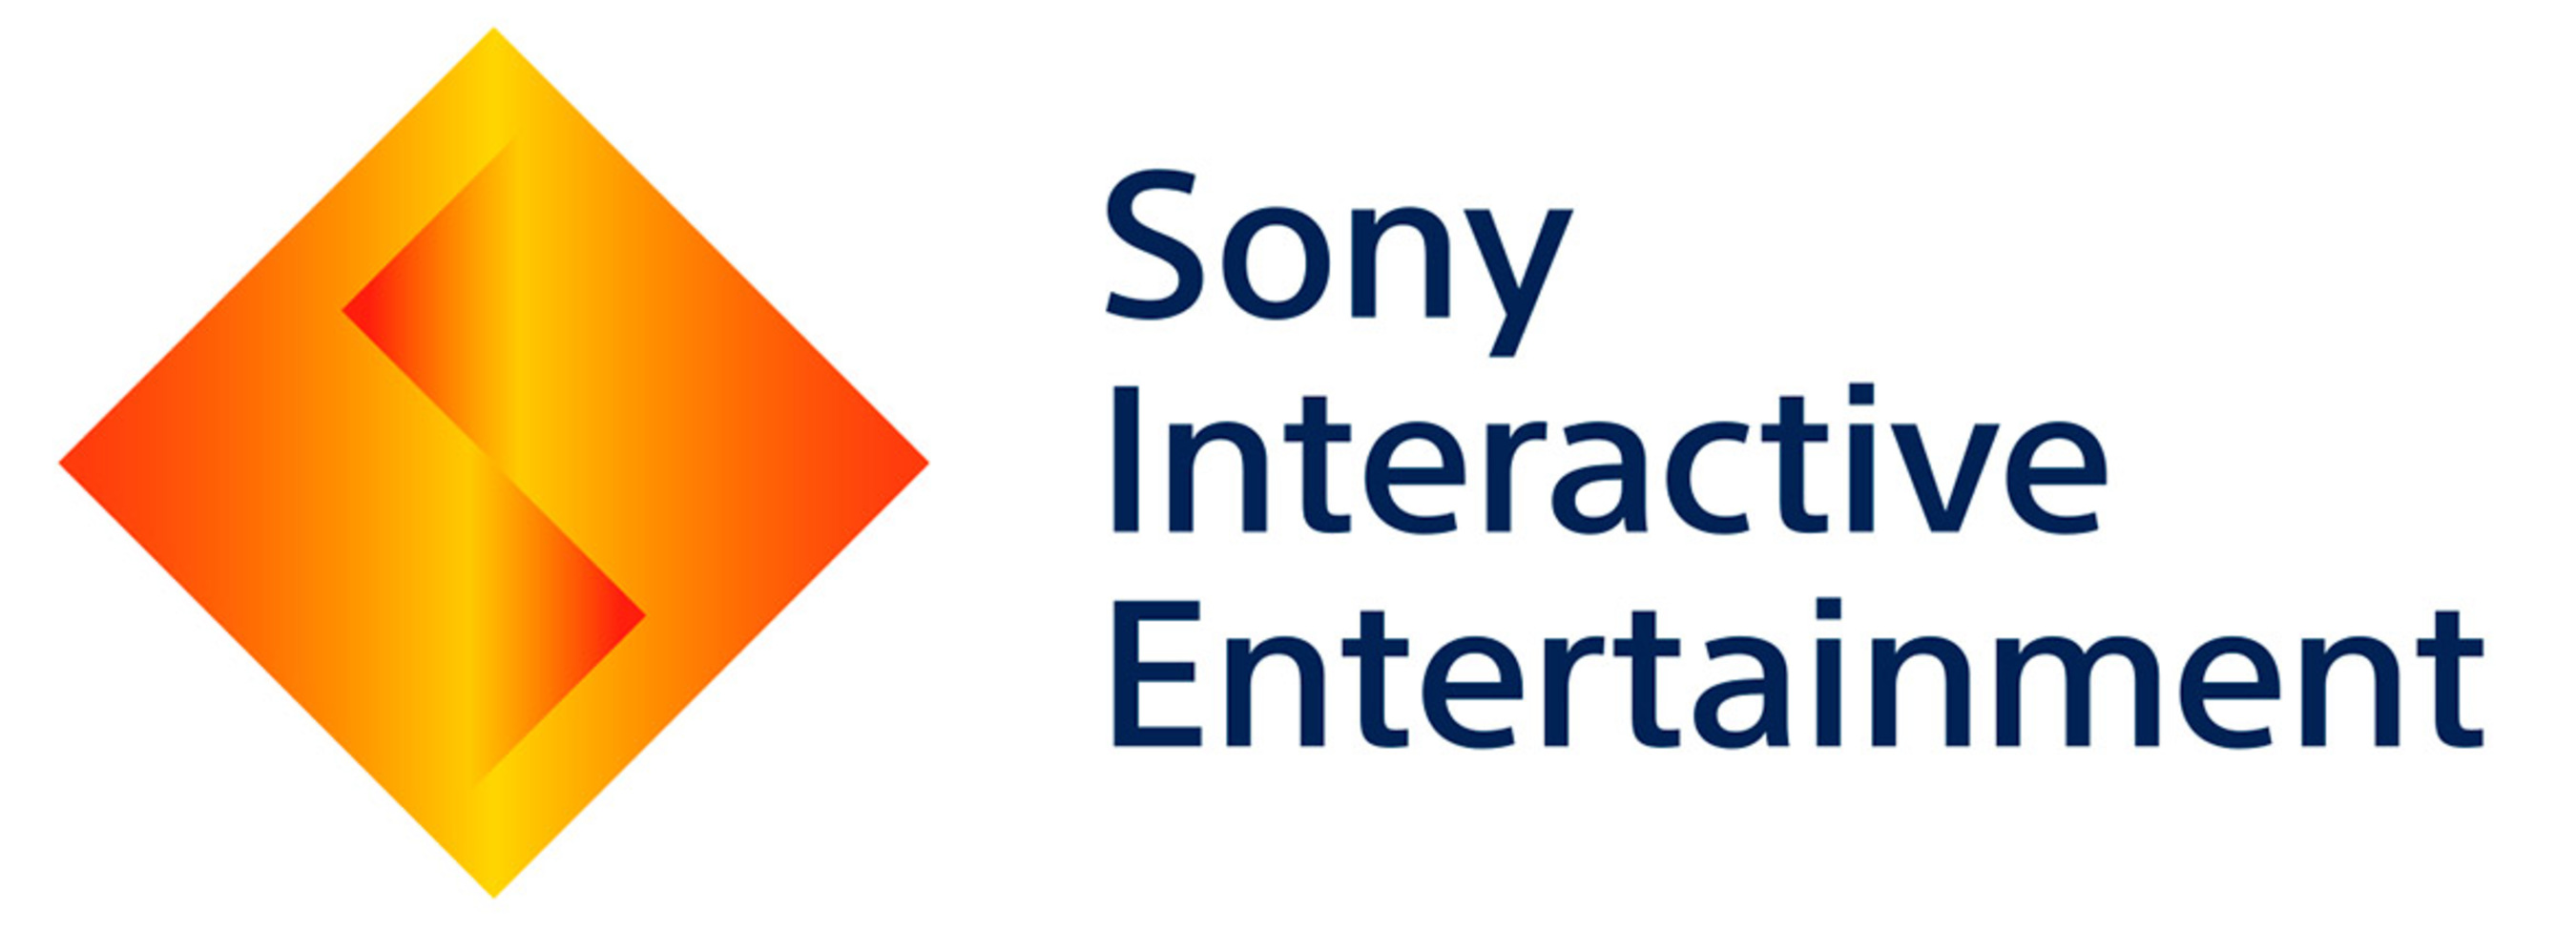 Sony Computer Entertainment corporate logo.